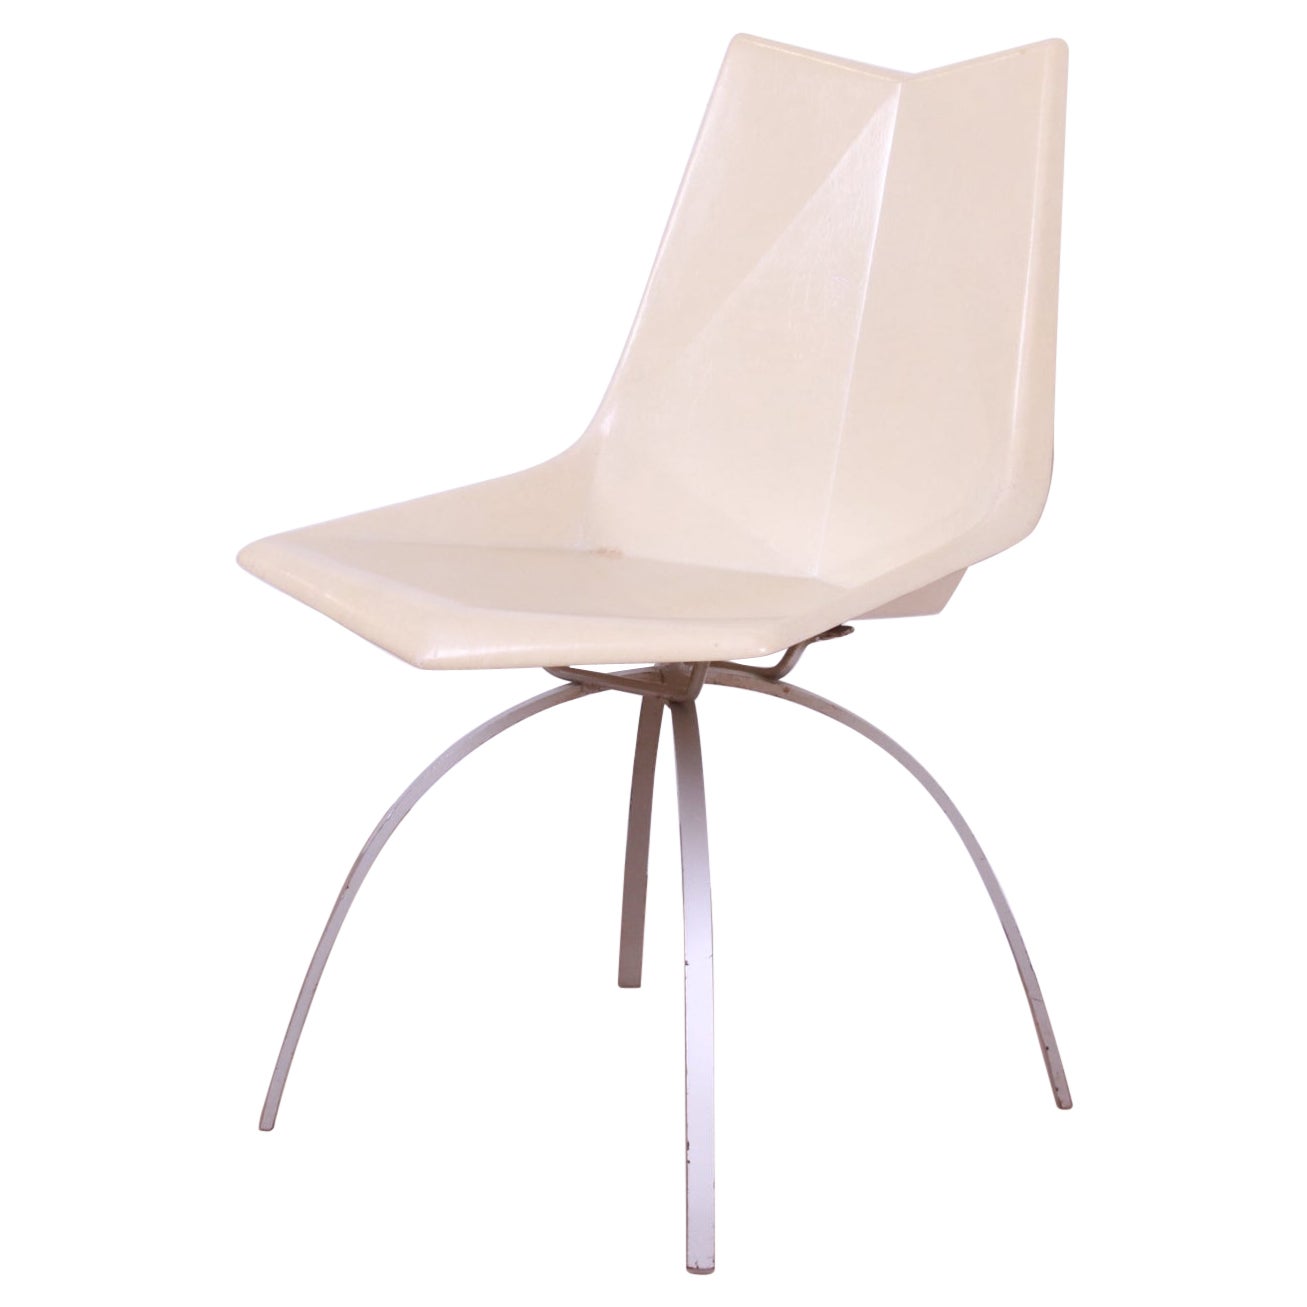 Paul McCobb Mid-Century Modern Fiberglass Origami Chair on Spider Base, 1950s